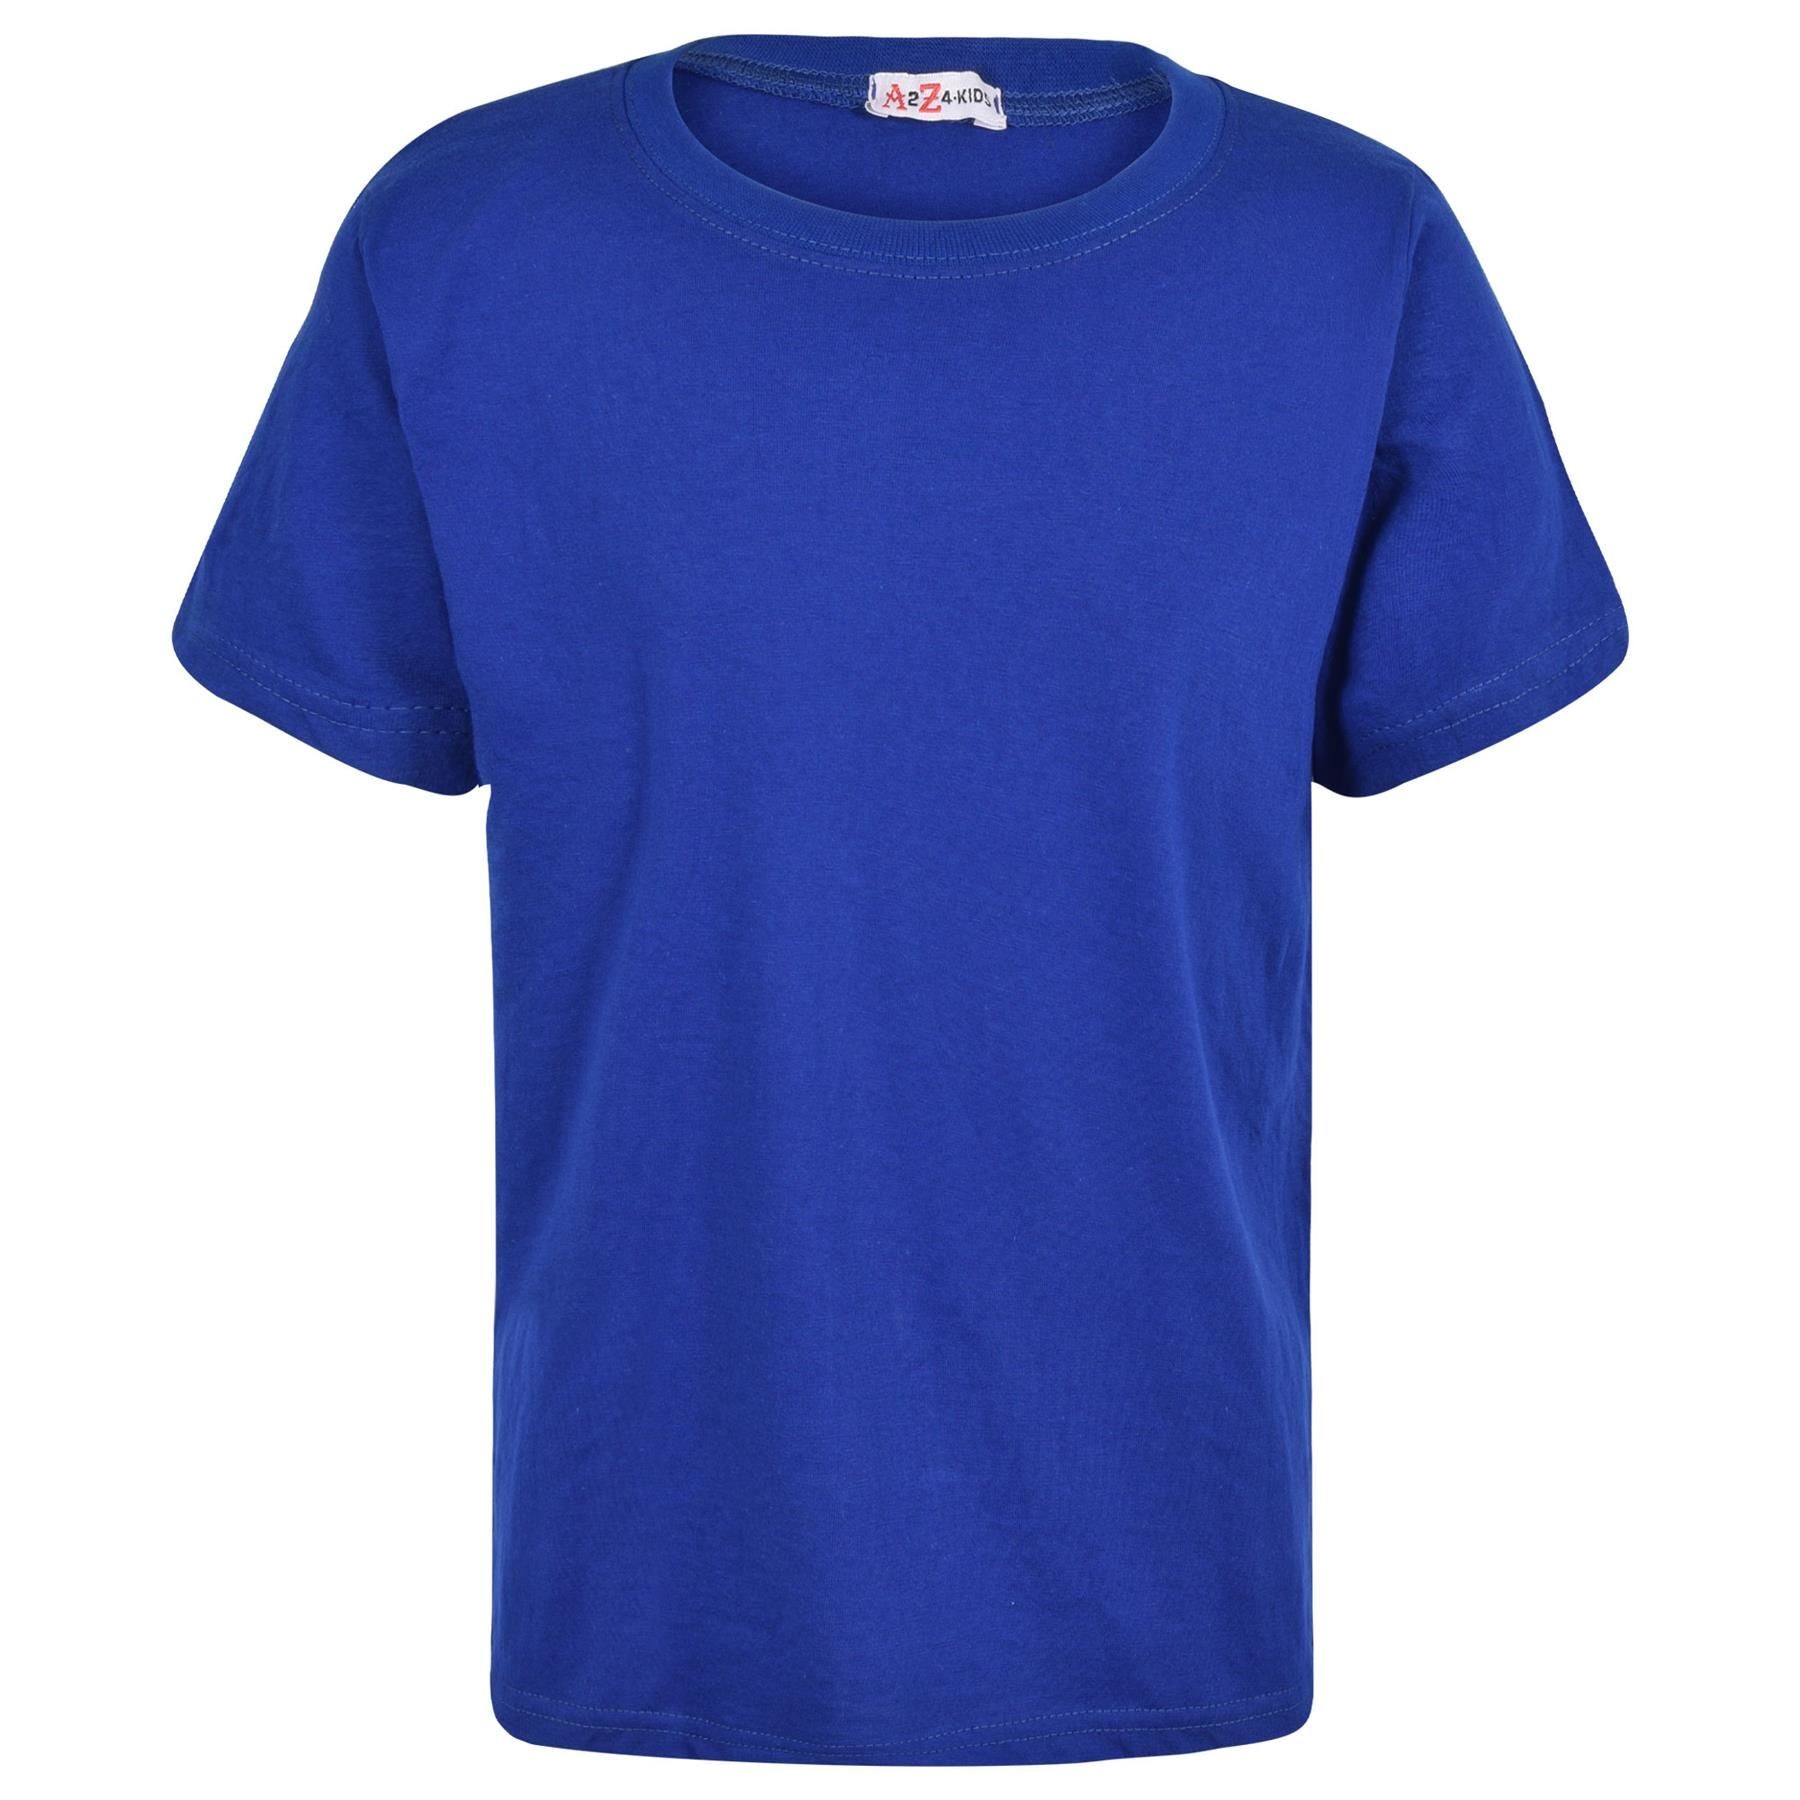 Boys Plain Soft Feel Summer Royal Blue T Shirt Top